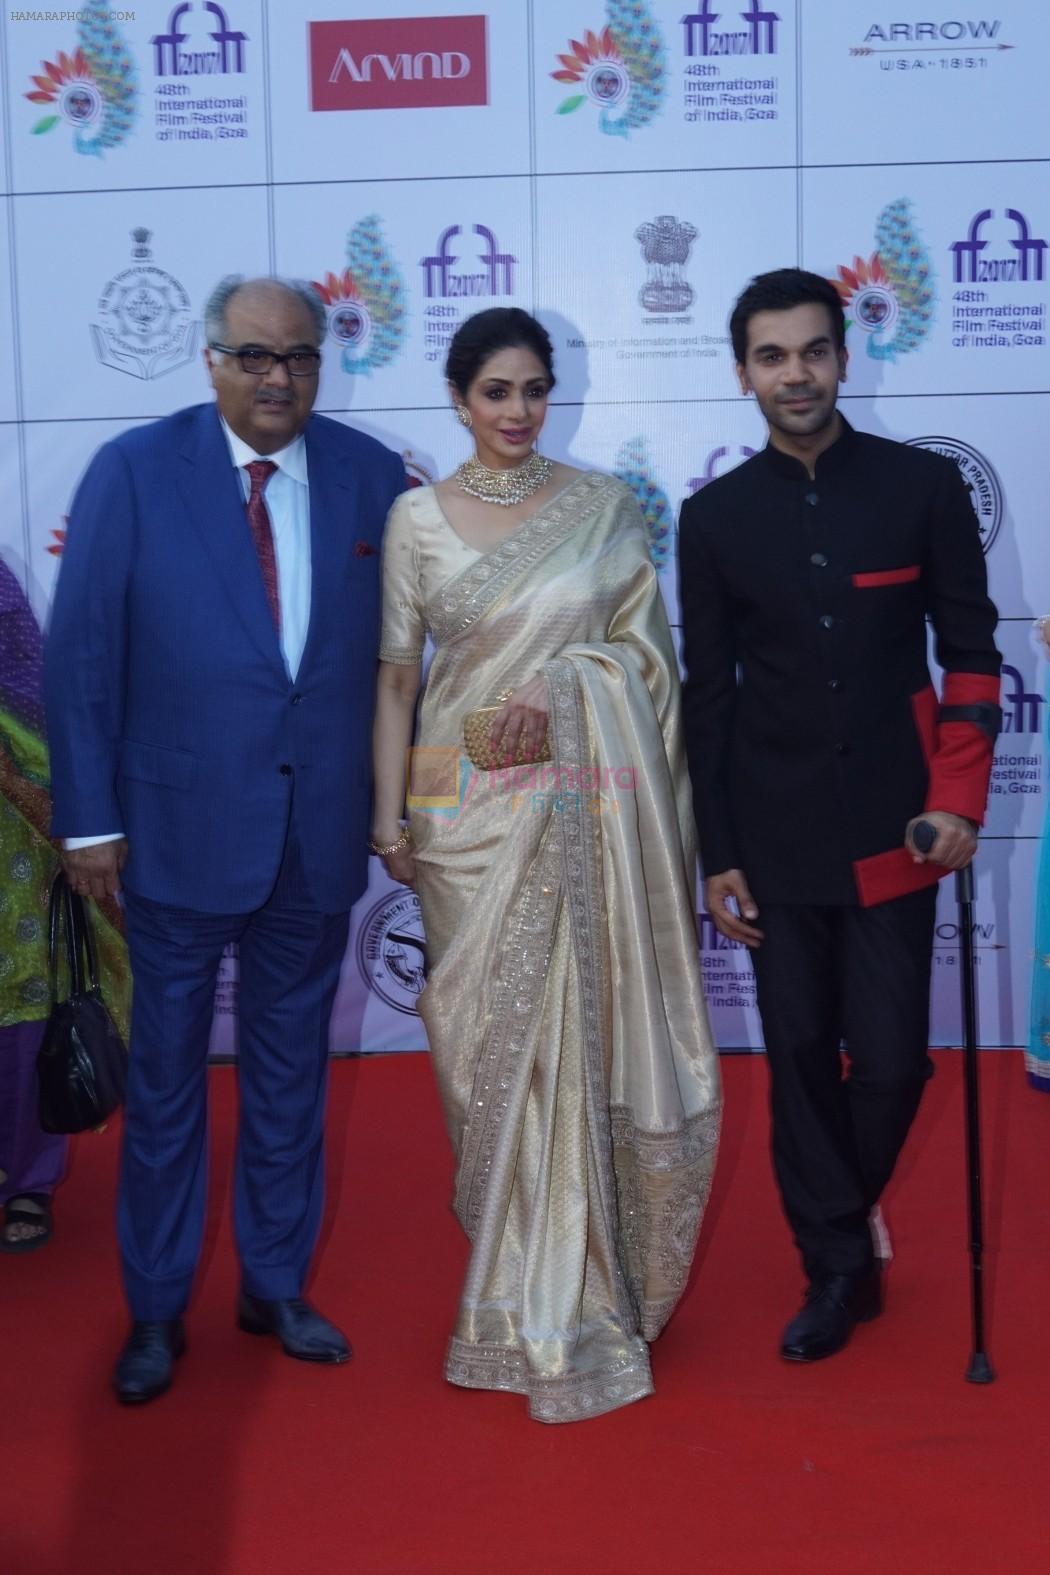 Sridevi, Boney Kapoor, Rajkummar Rao at IFFI 2017 Opening Ceremony on 20th Nov 2017